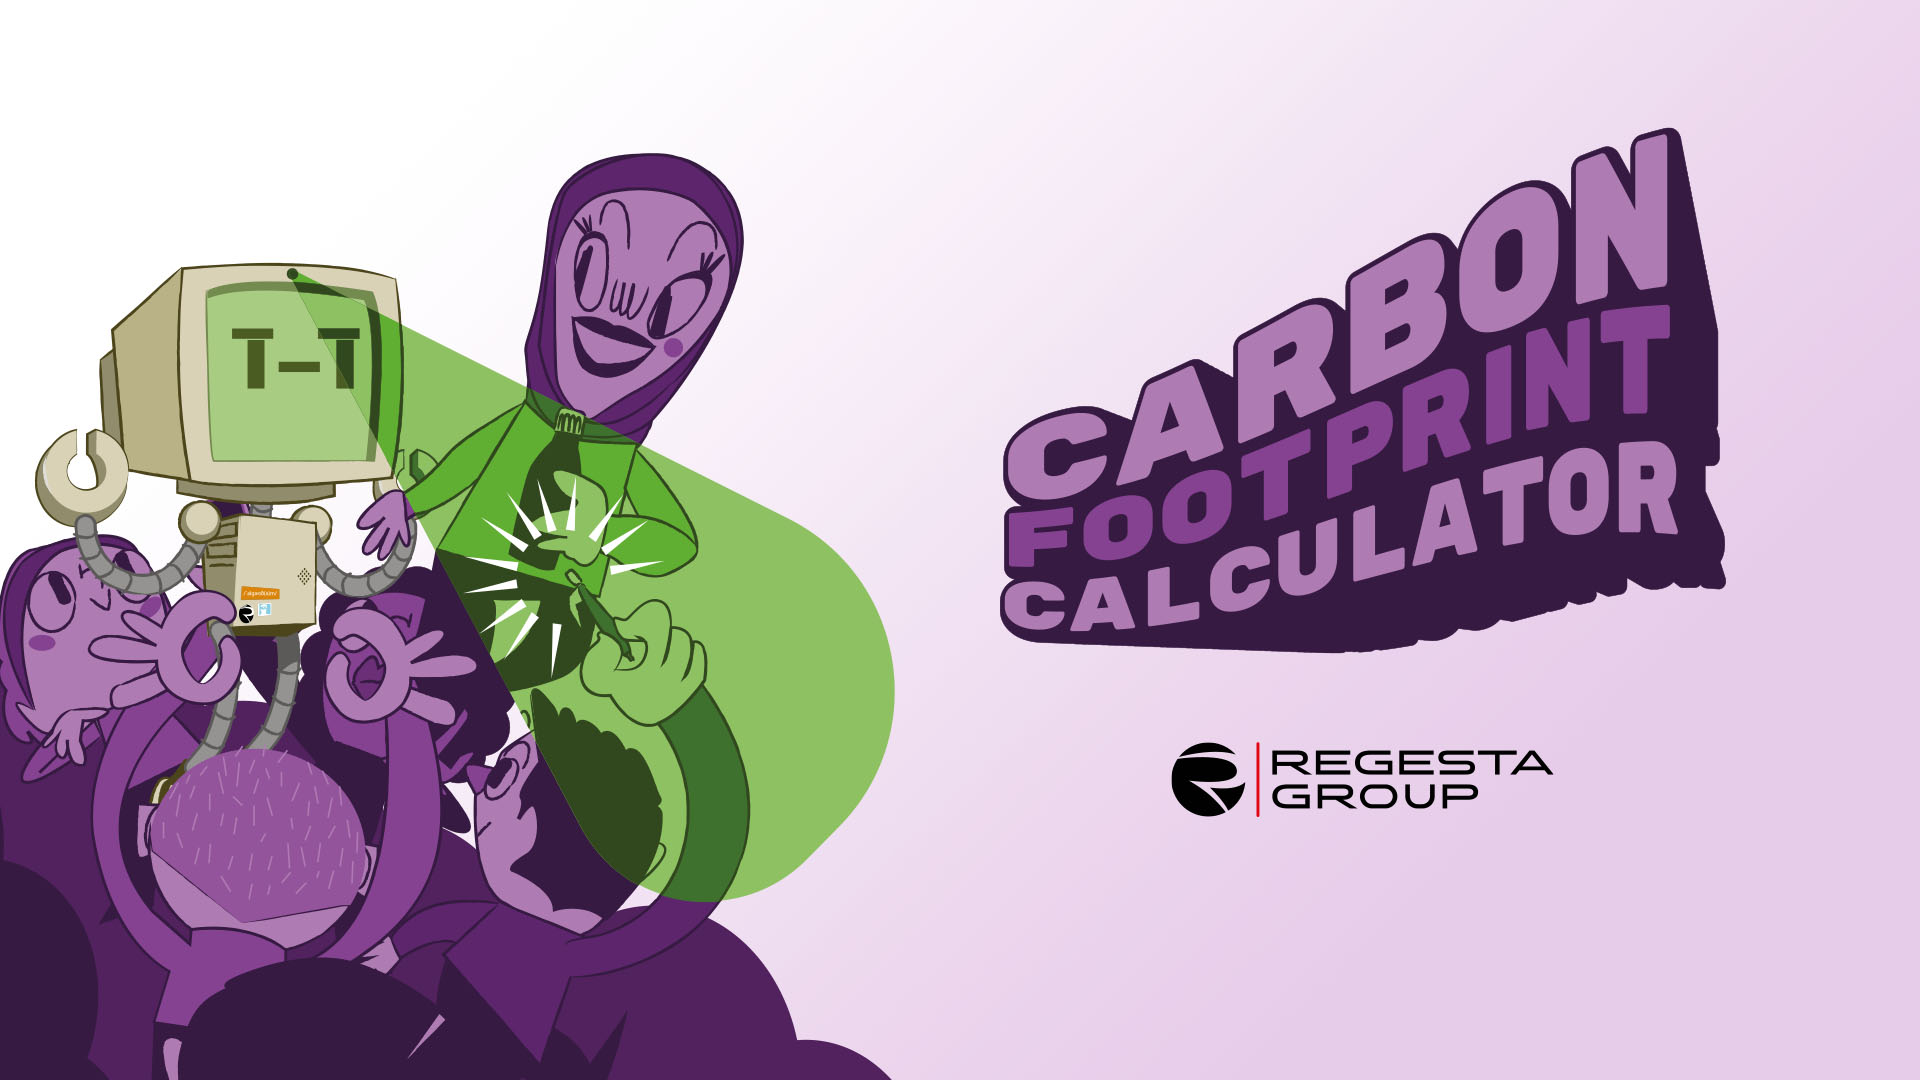 carbon footprint calculator